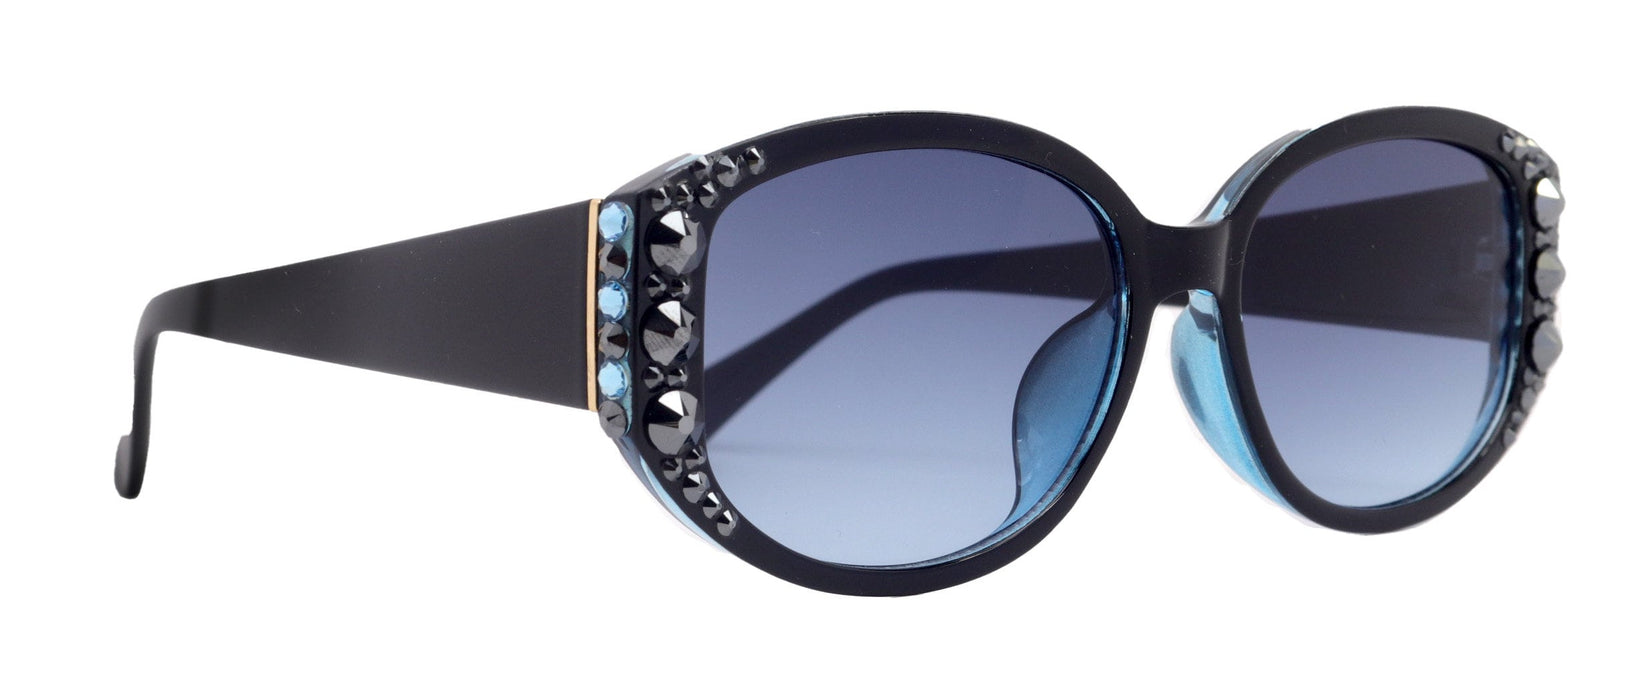 Bling Women Sunglasses W Hematite and Aquamarine Genuine European Crystals, 100% UV Protection. NY Fifth Avenue